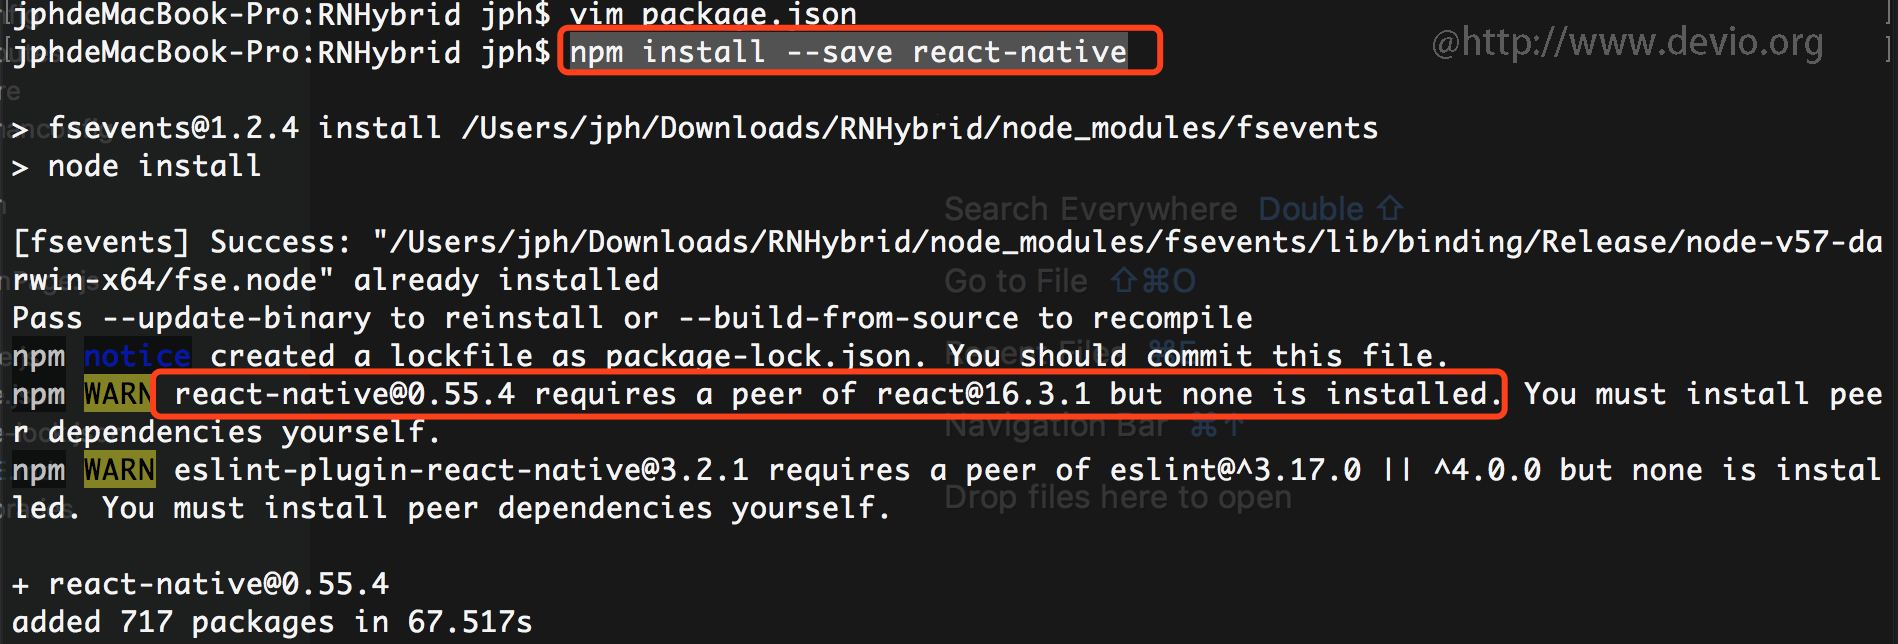 npm-install--save-react-native.png